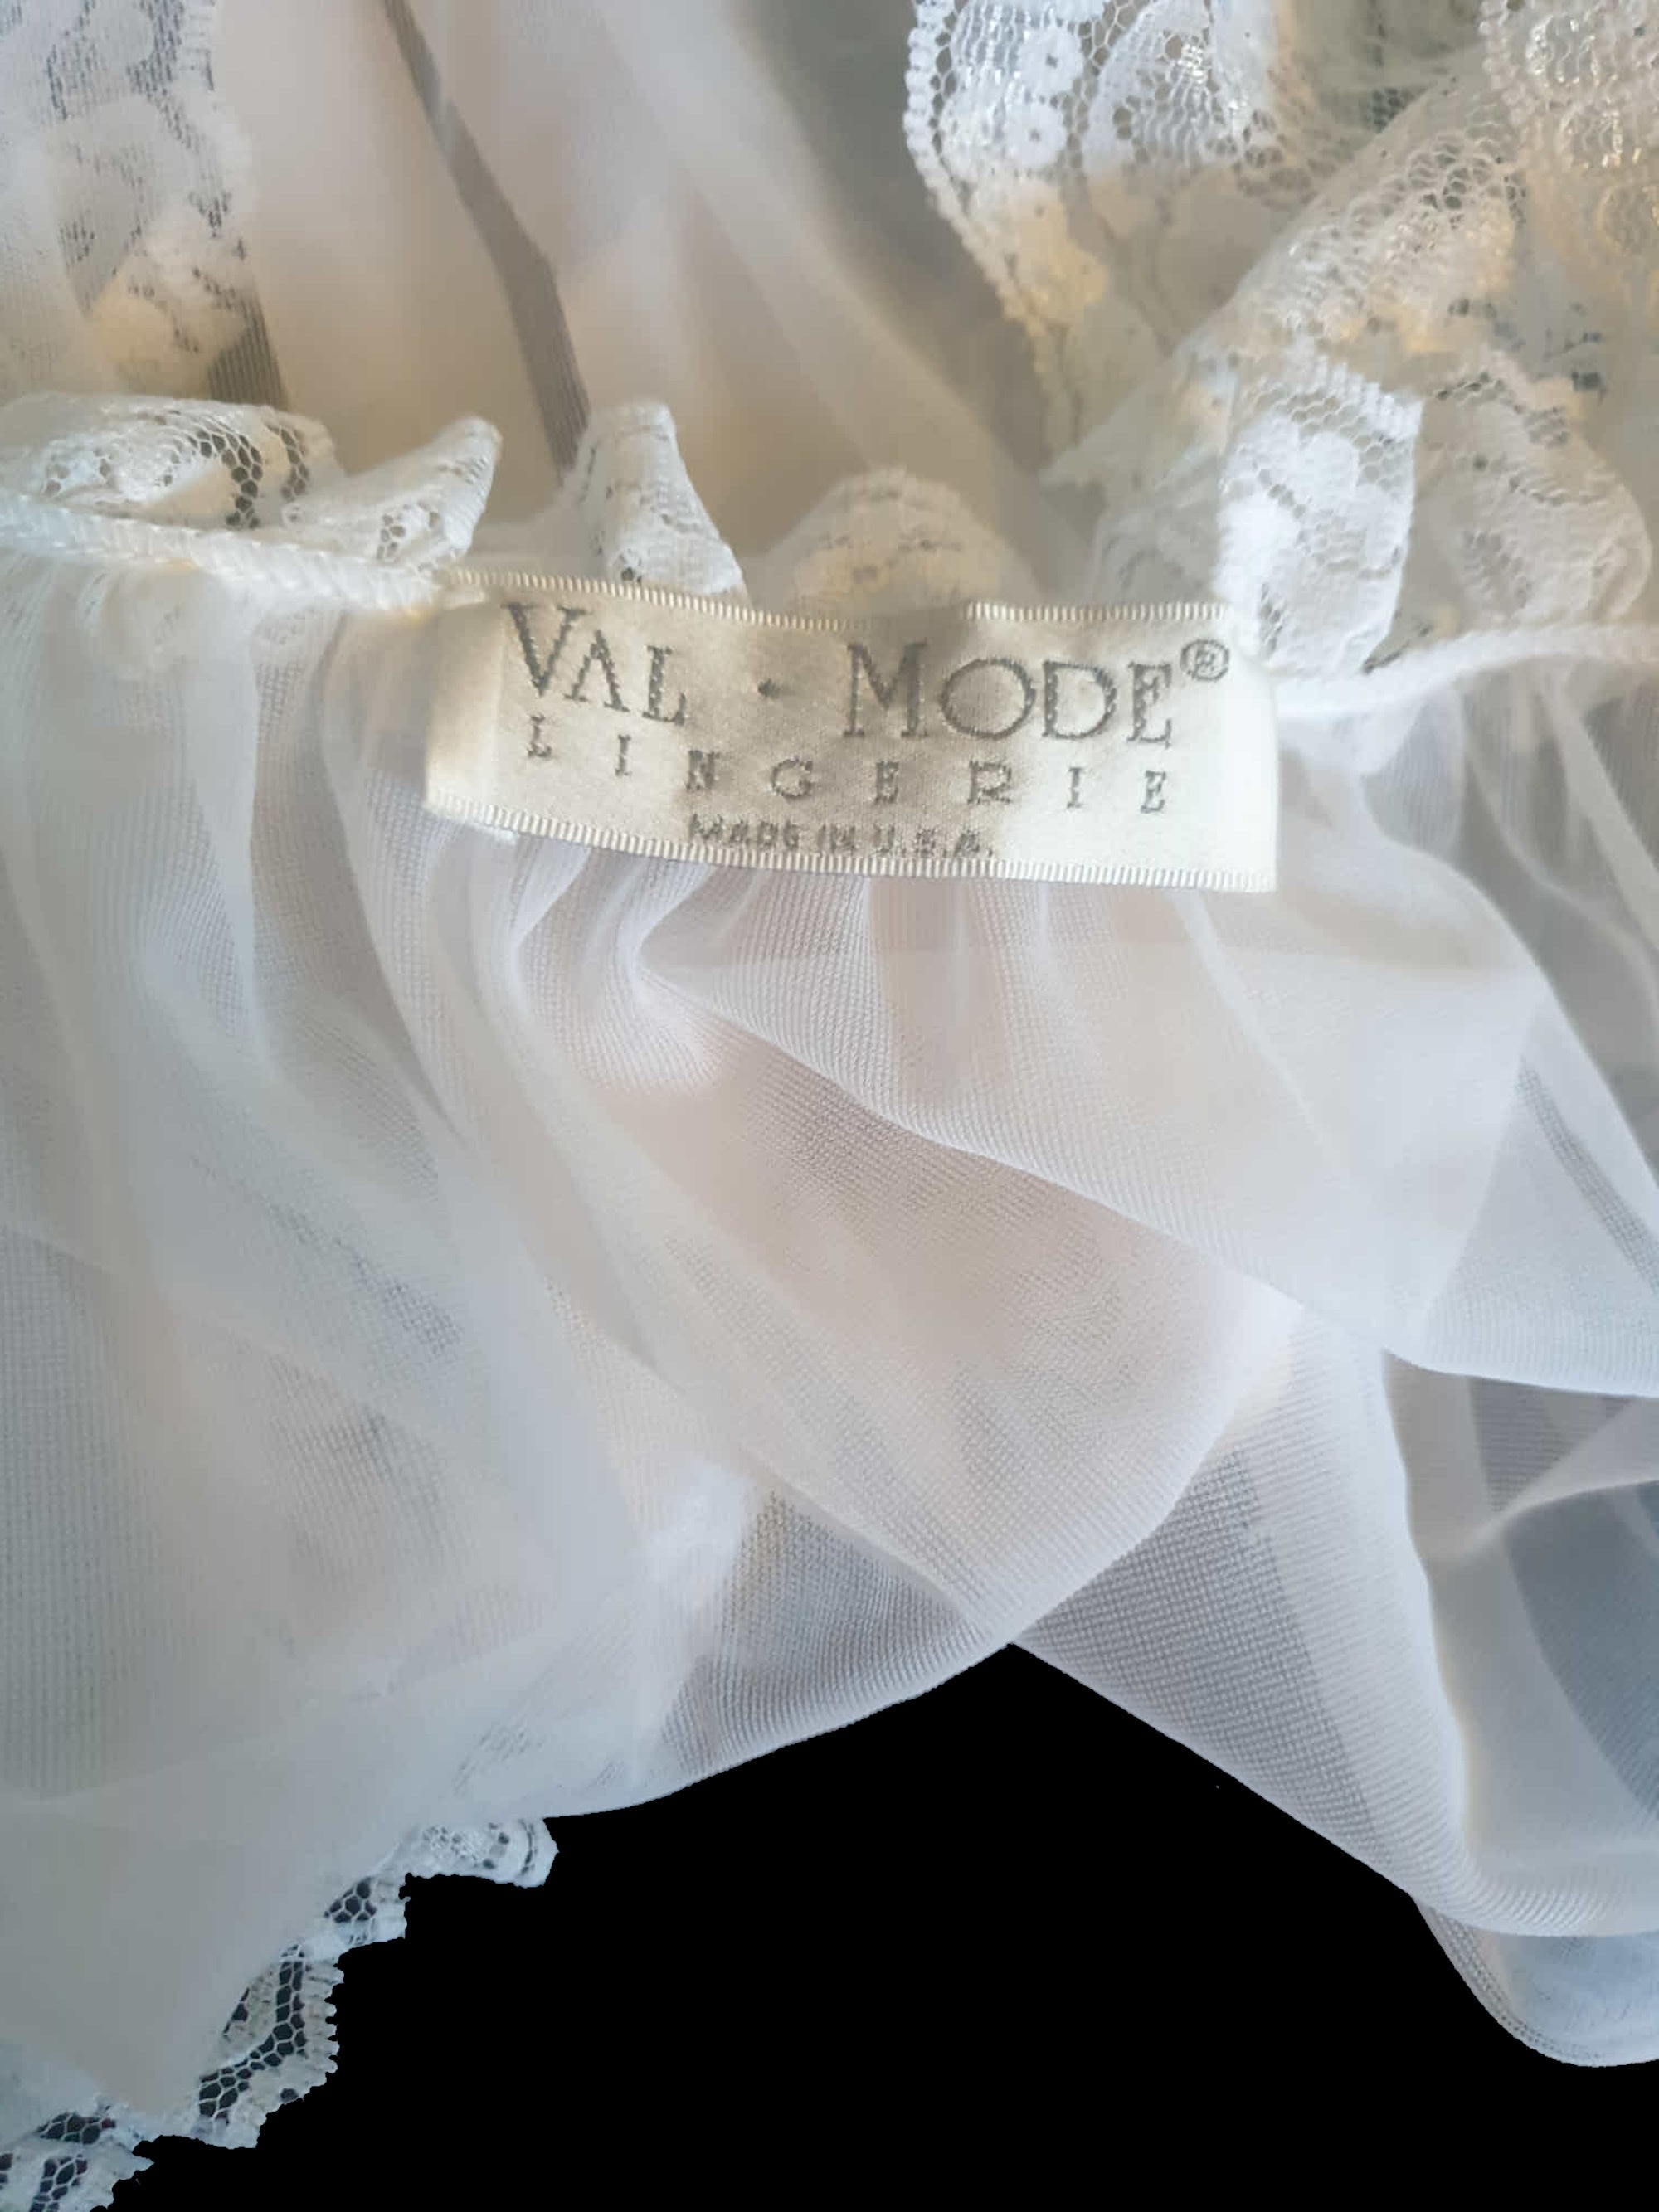 vintage dead stock sheer white peignoir negligee robe by val mode Medium